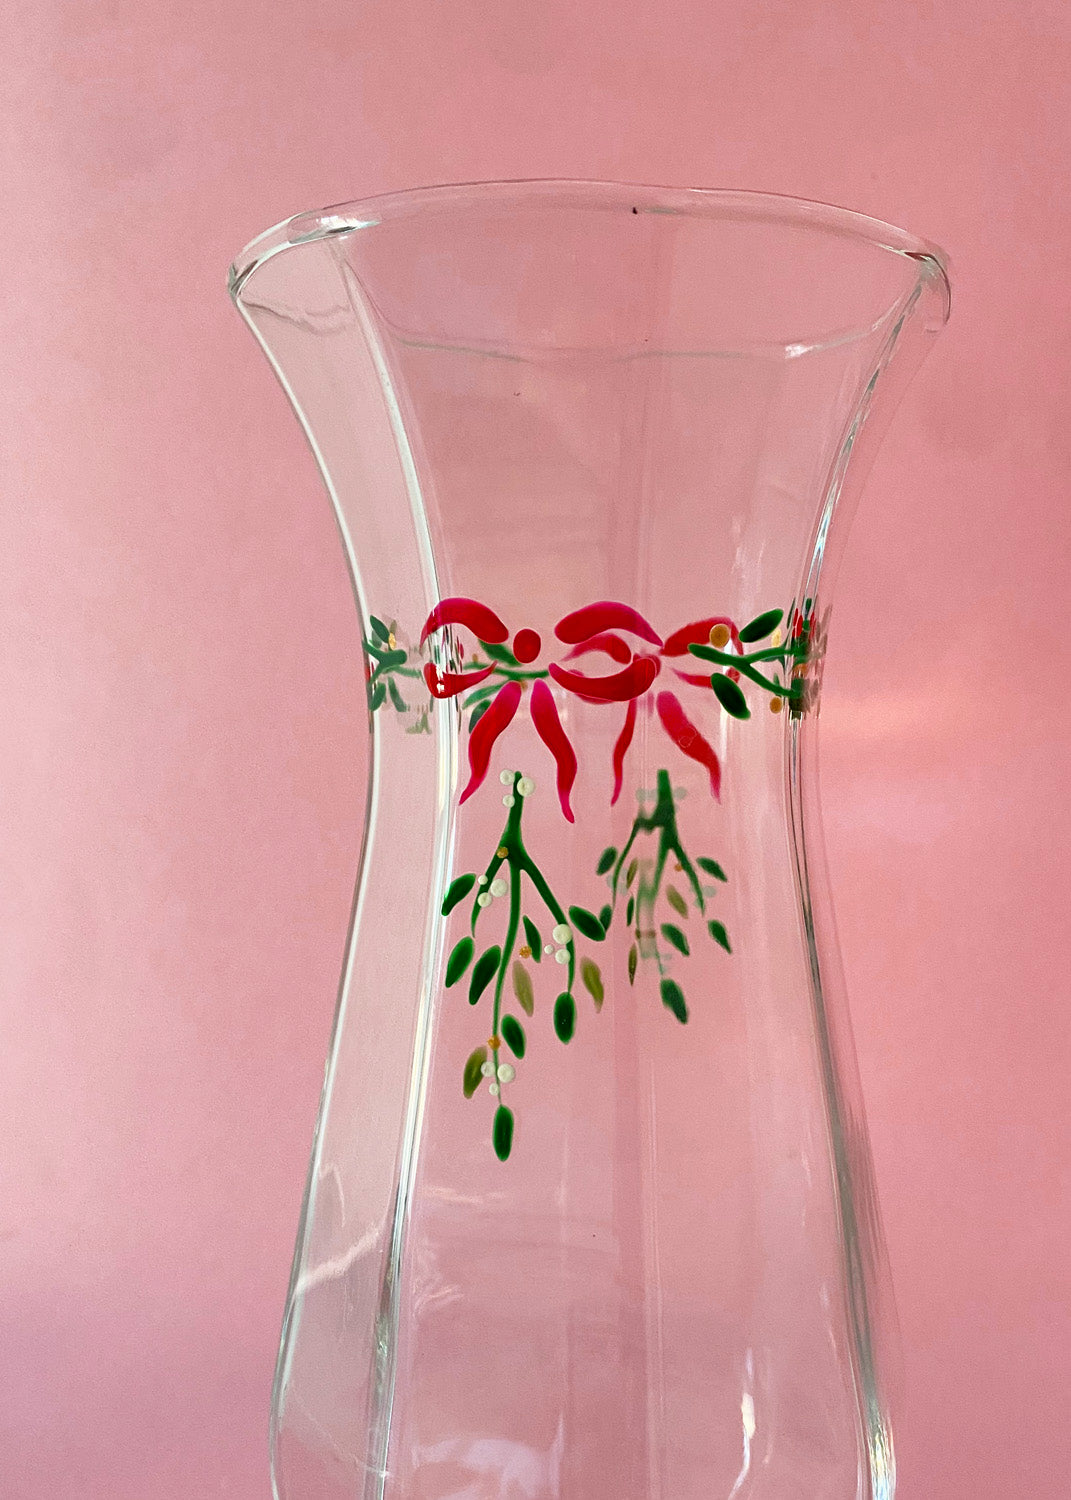 Vintage art deco style festive vase